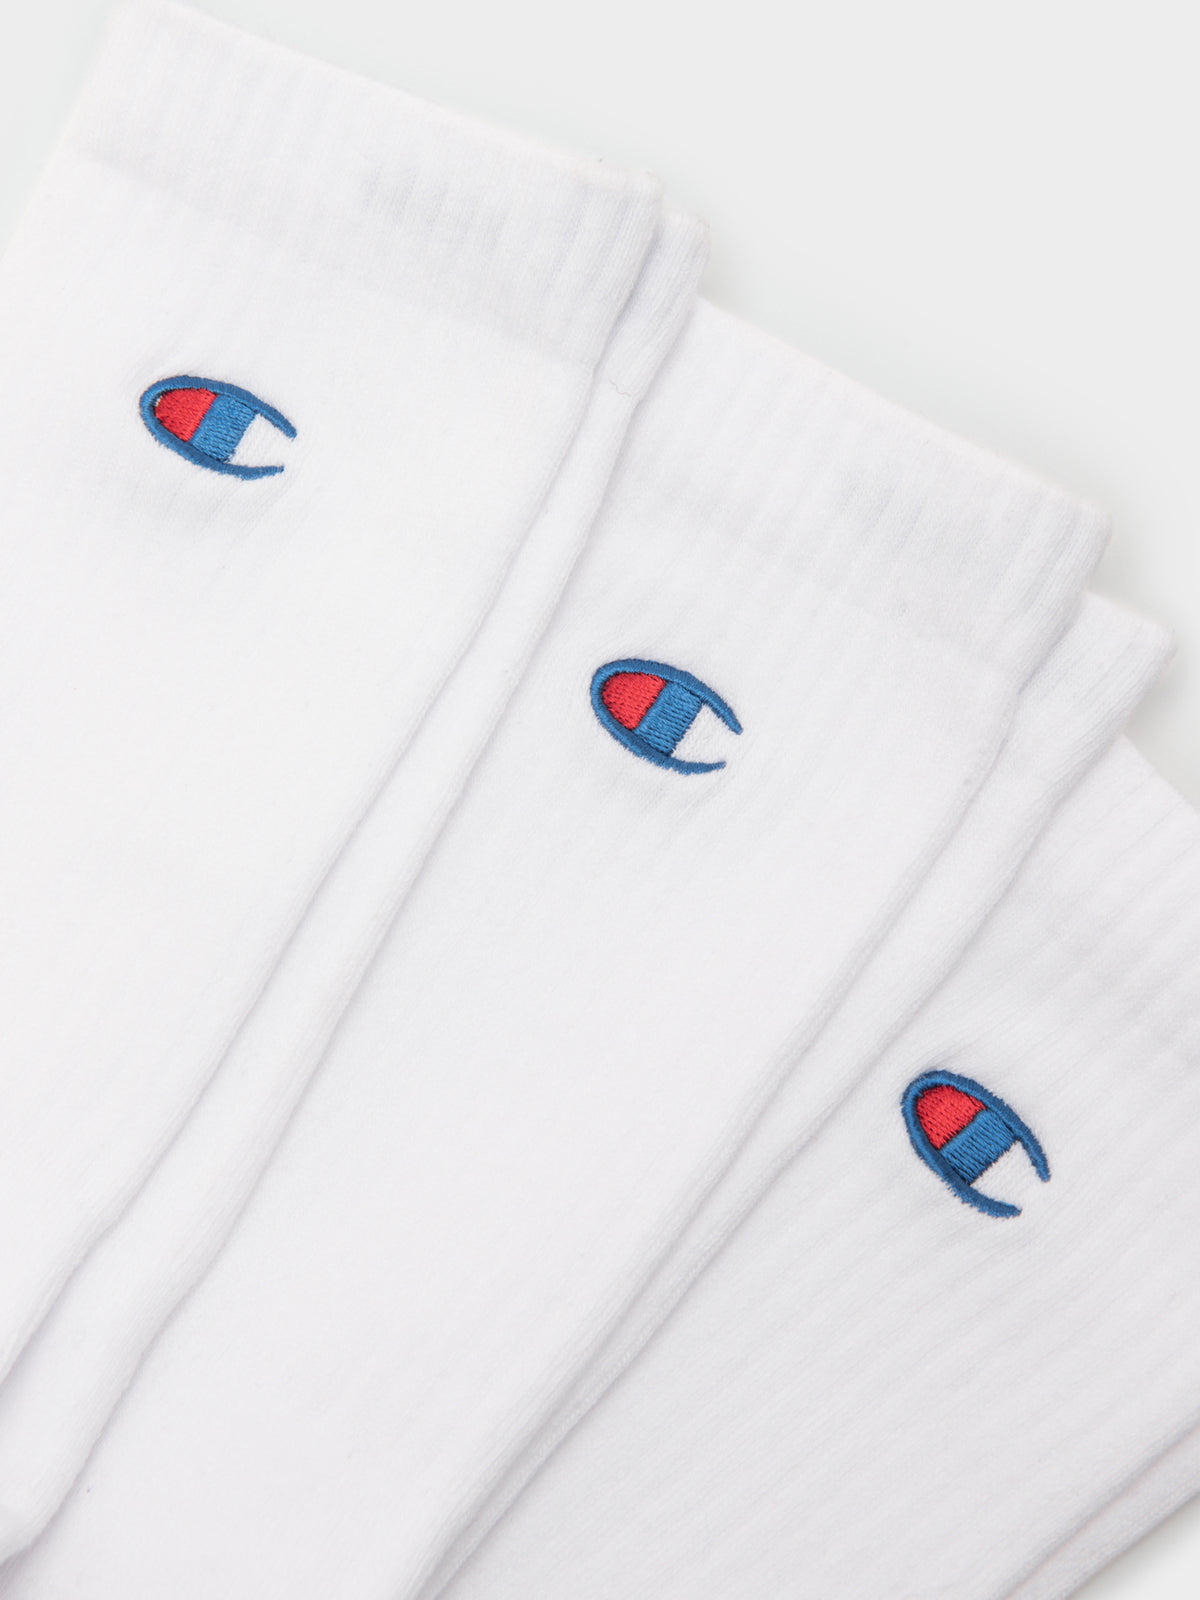 3 Pairs of Lifestyle C Logo Crew Socks in White